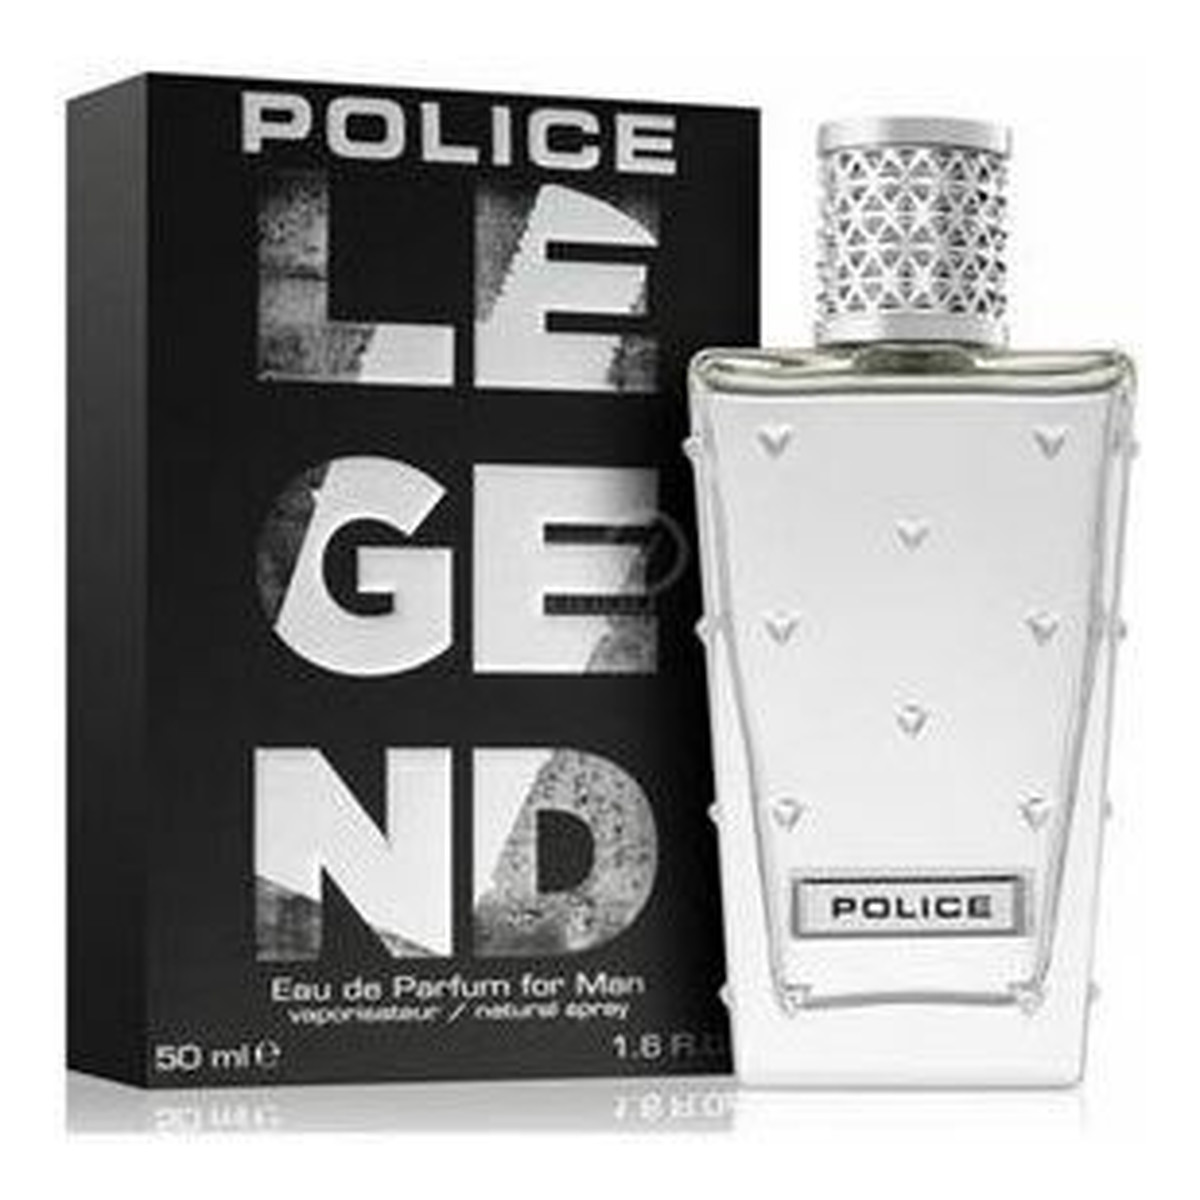 Police The Legendary Scent For Man woda perfumowana 50ml